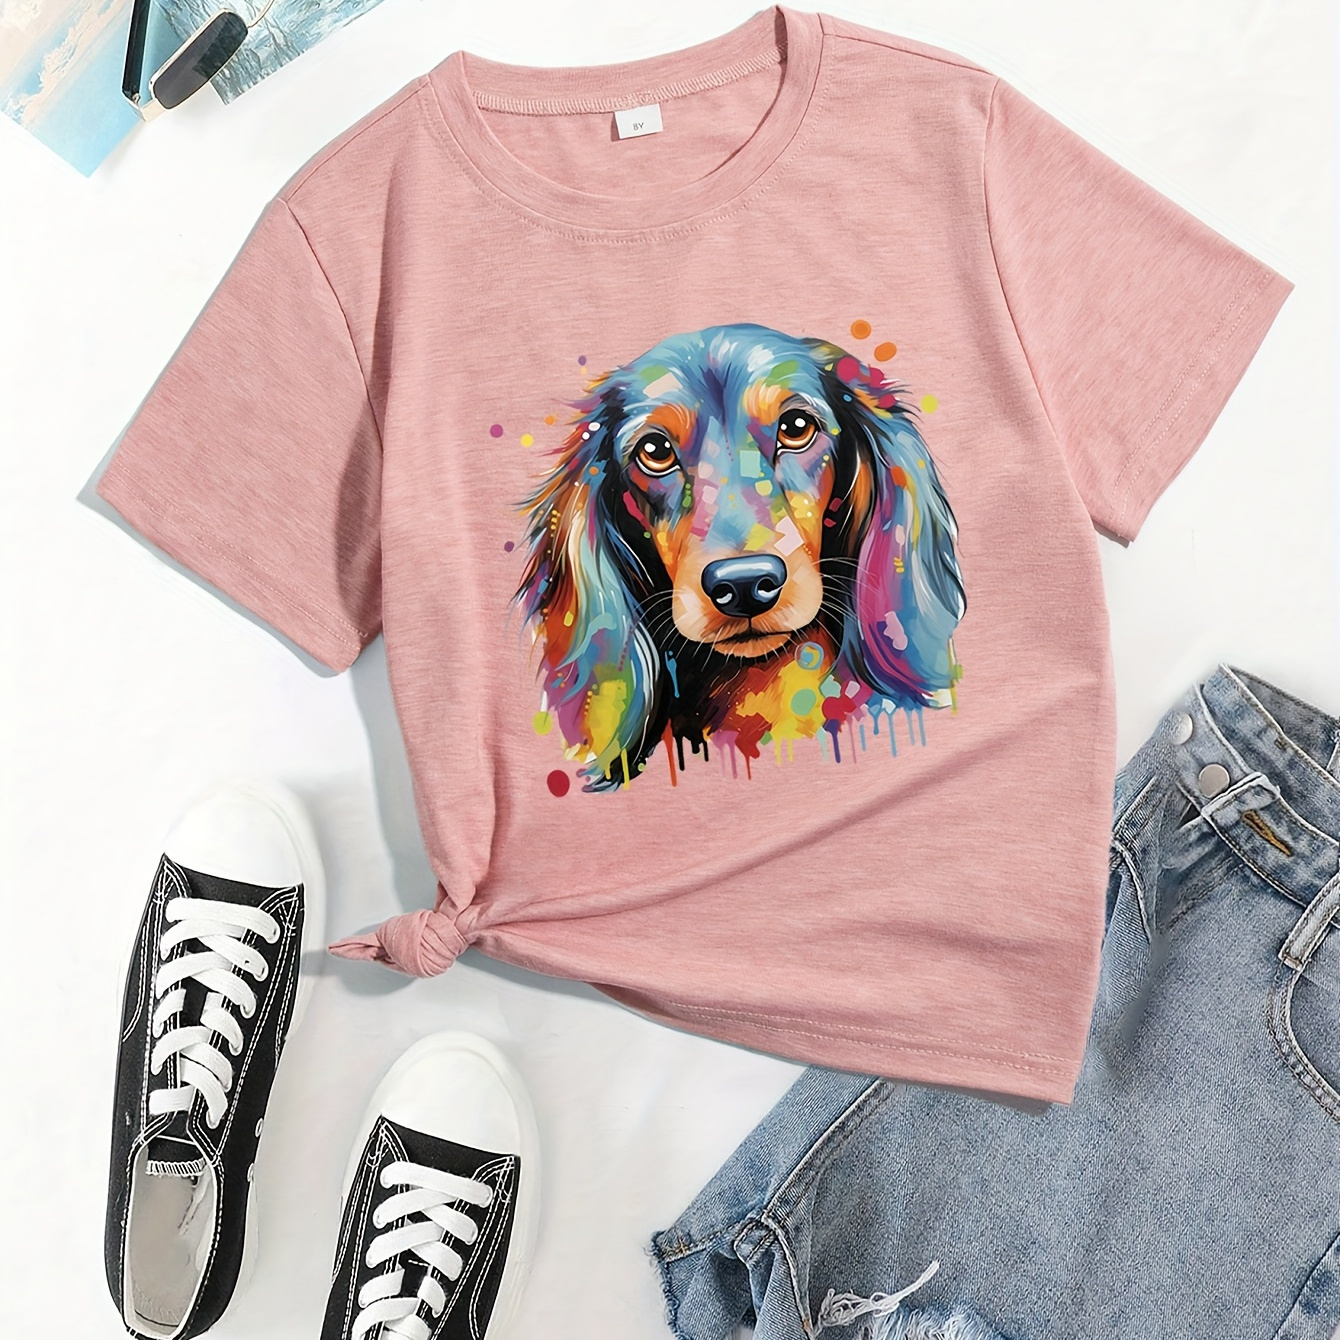 

Trendy Puppy Graphic Print Creative T-shirts, Soft & Elastic Comfy Crew Neck Short Sleeve Tee, Girls' Summer Tops